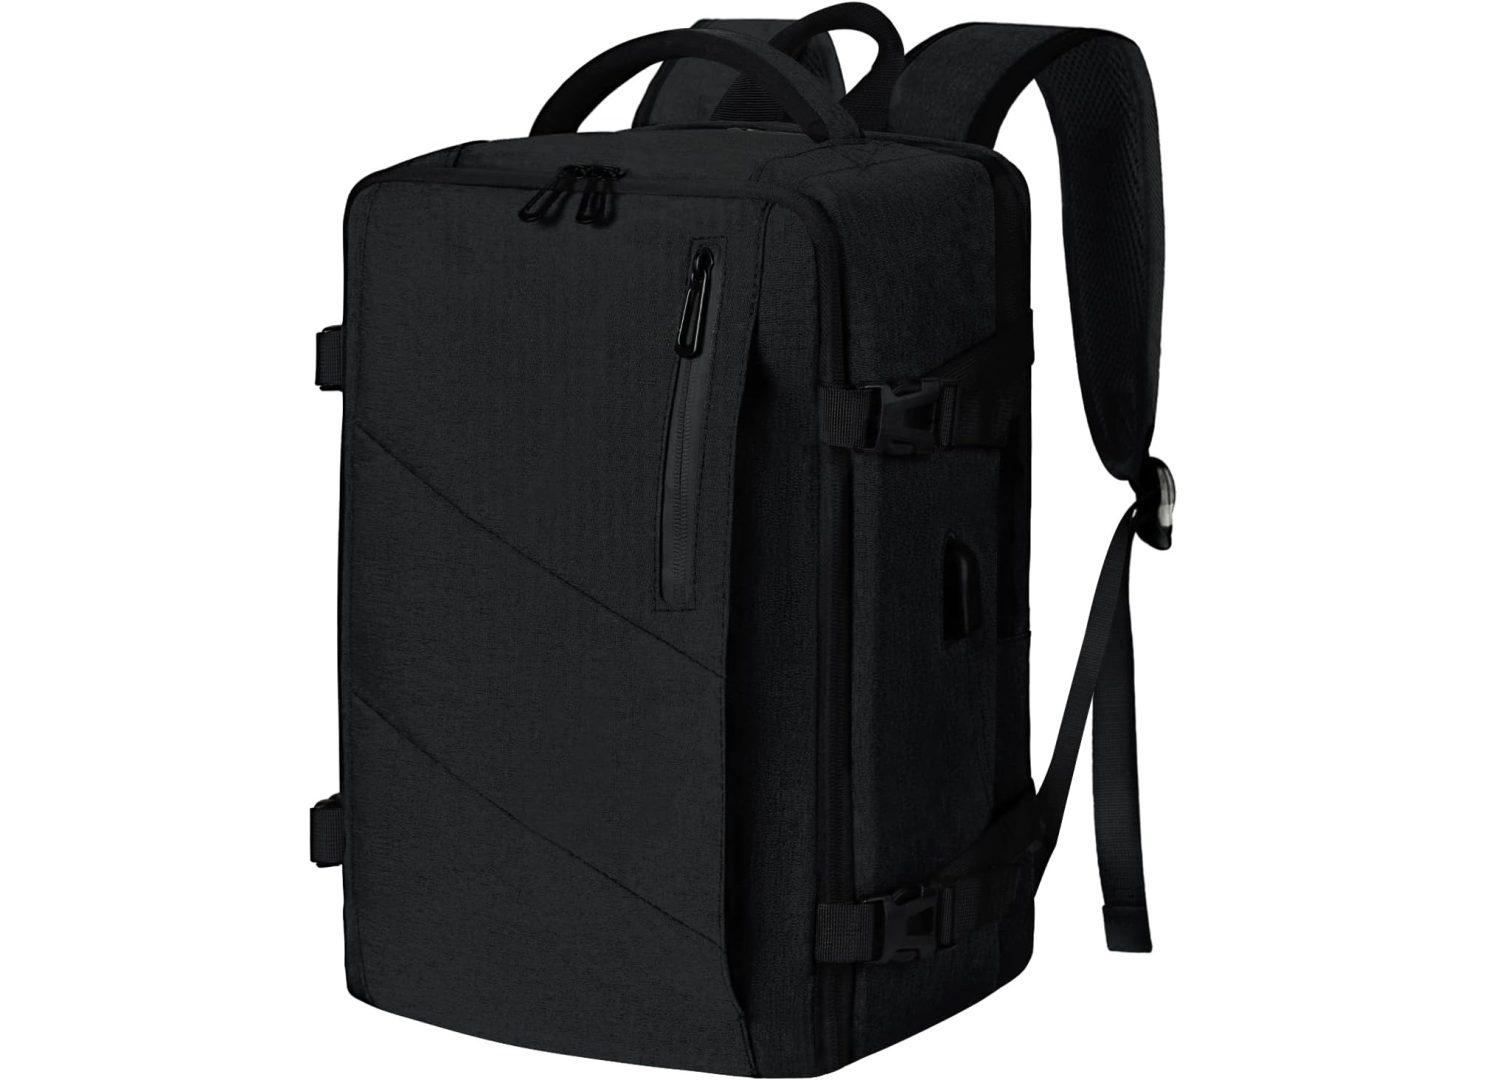 La mochila perfecta para viajar ligero: medidas ideales de 40 x 20 x 25 cm  